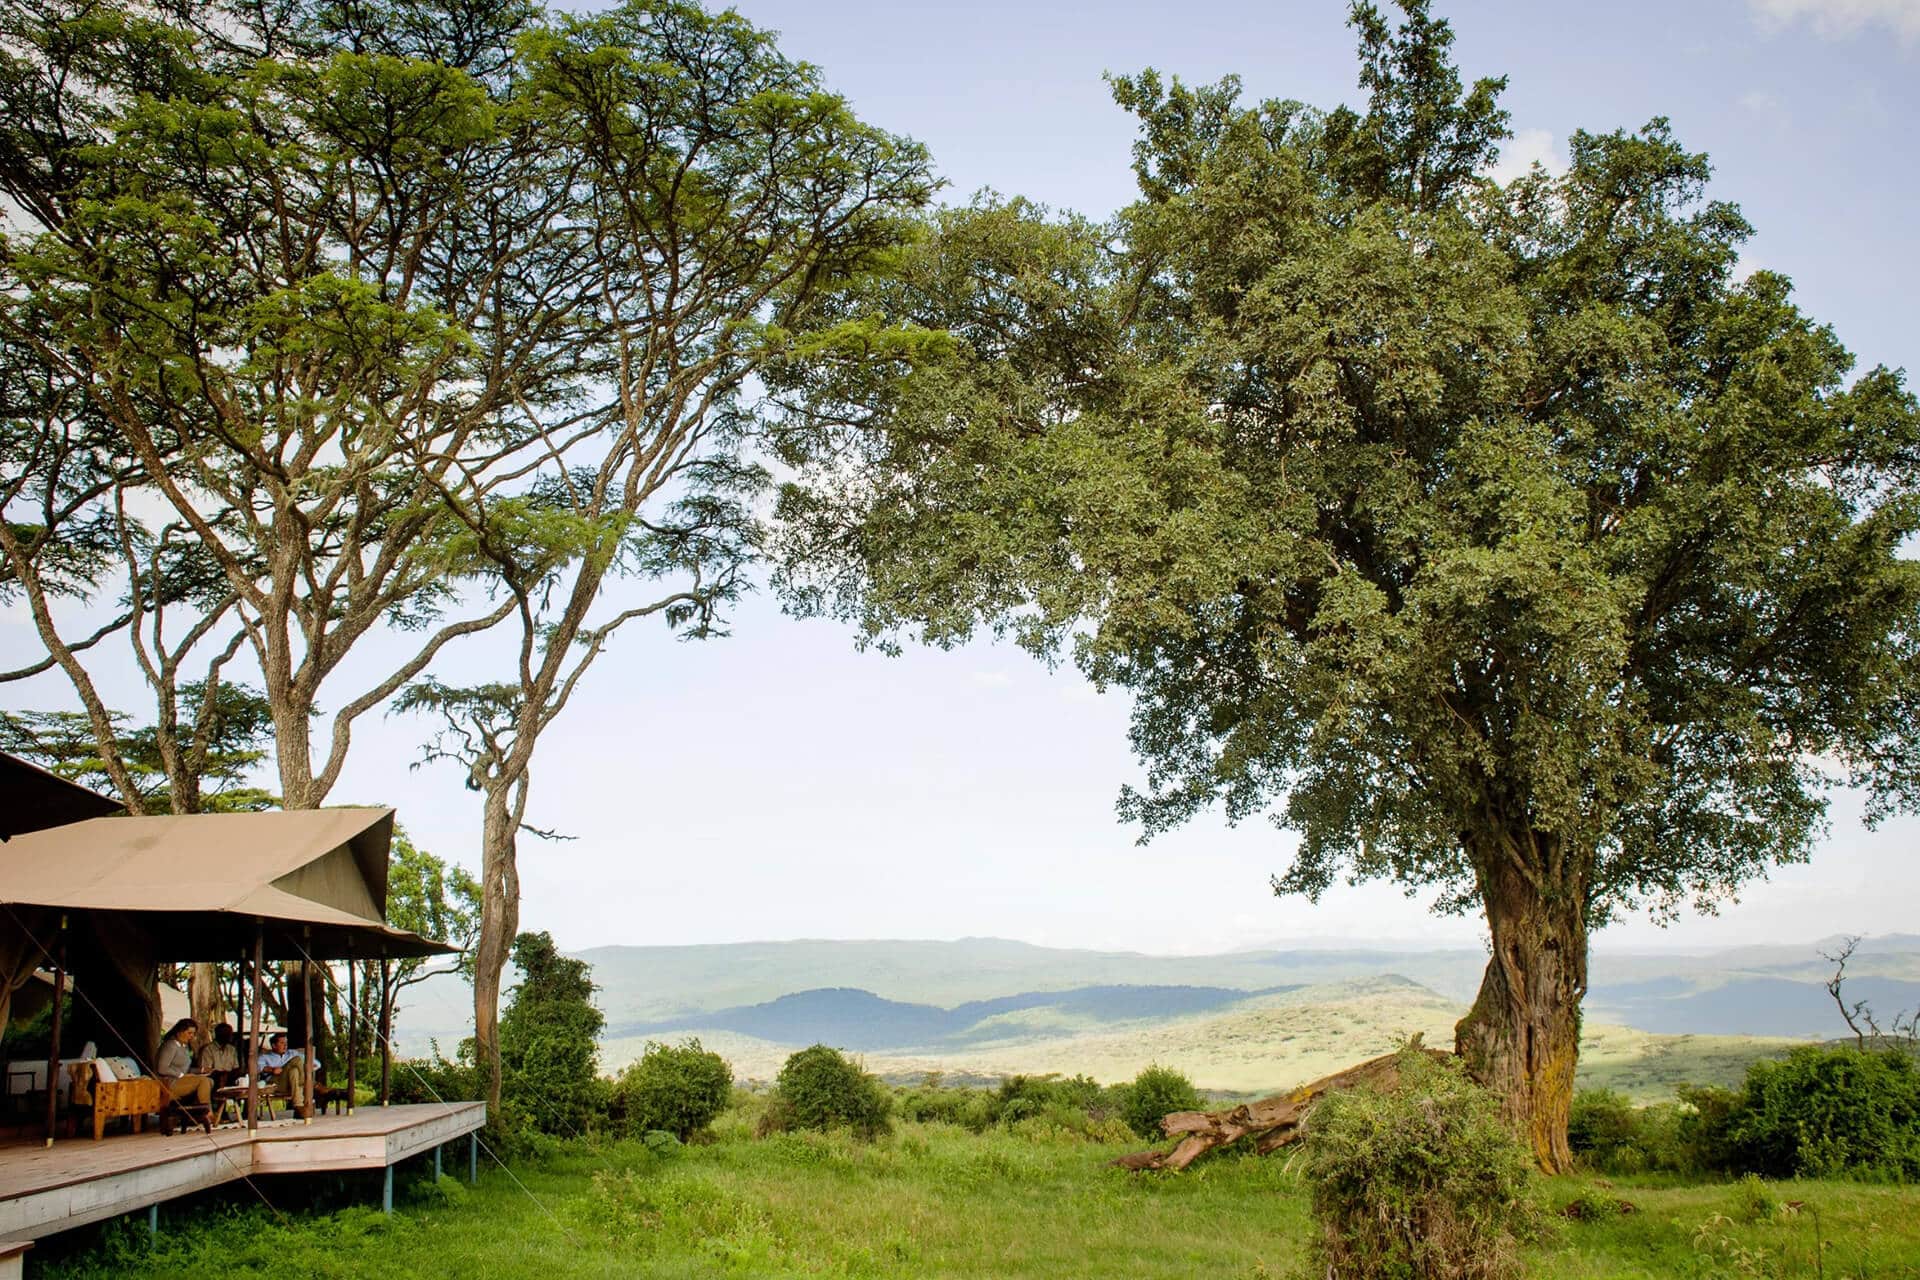 The mess tent at Entamanu Ngorongoro with view of the Ngorongoro Crater